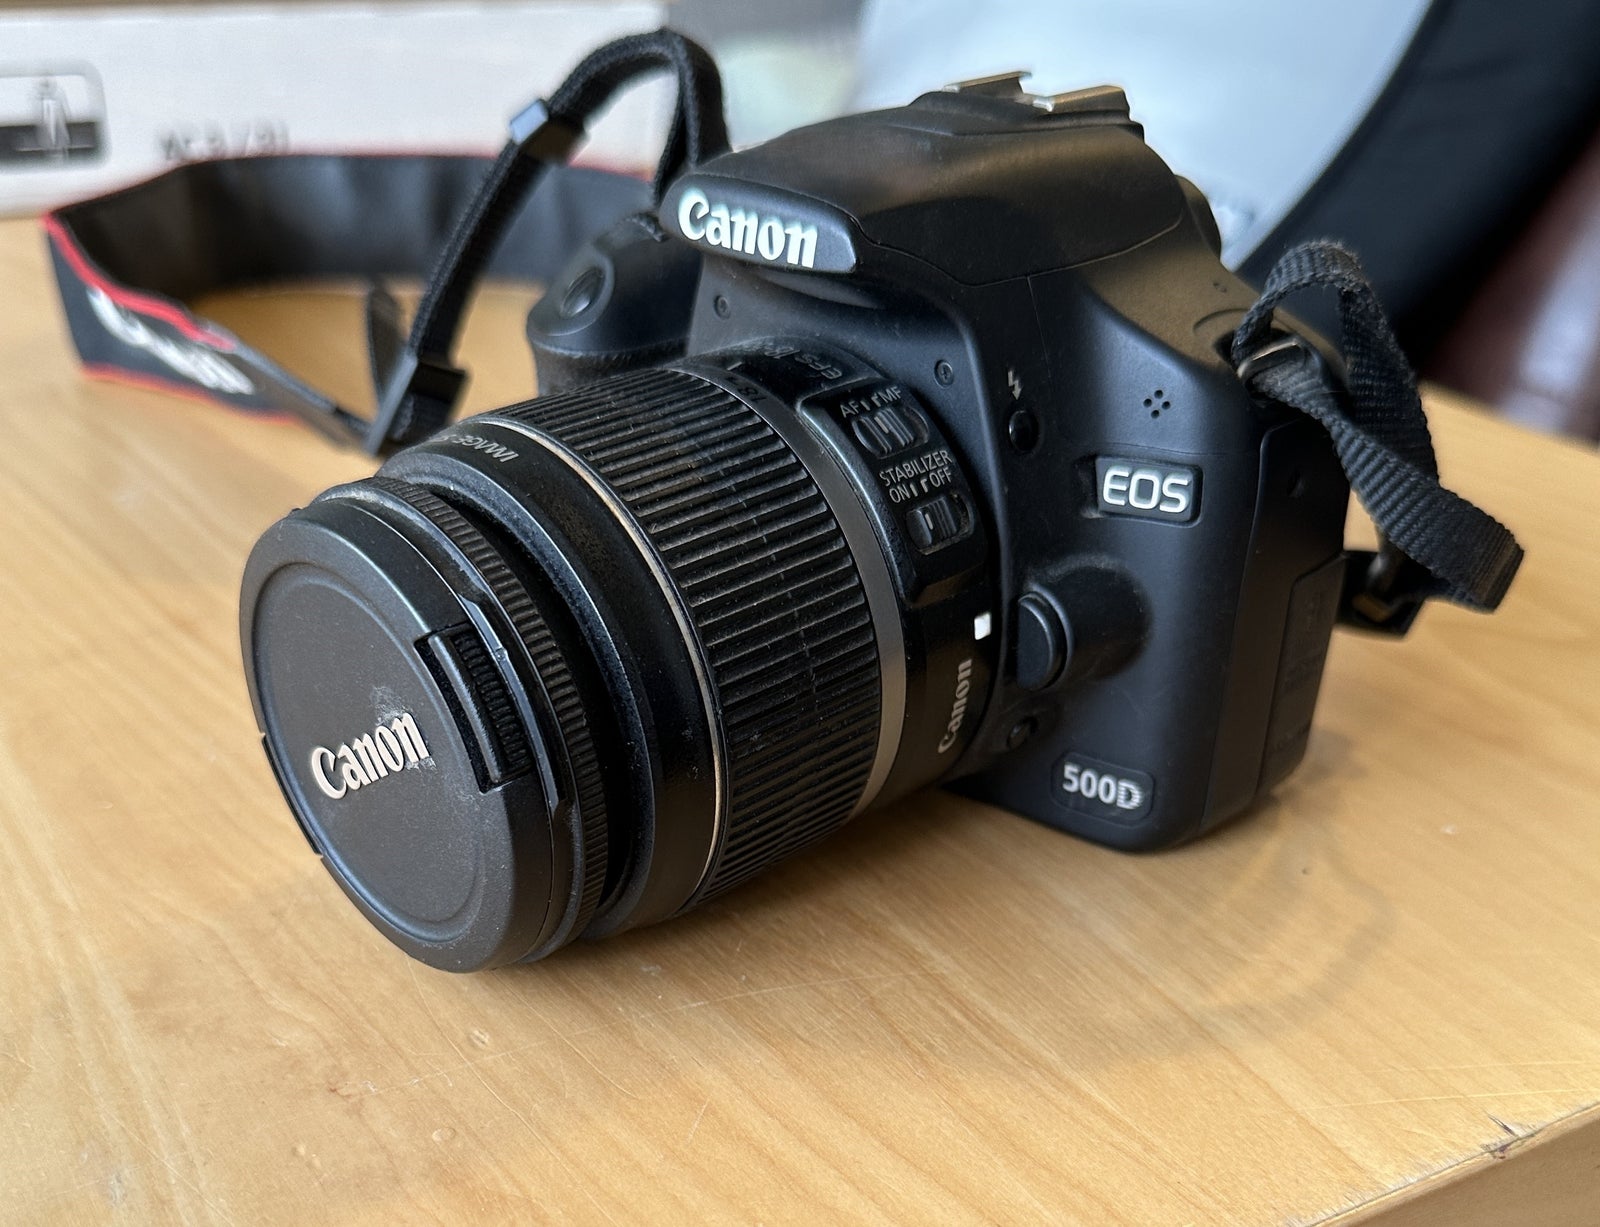 Spejlrefleks kamera, Canon, EOS 500D